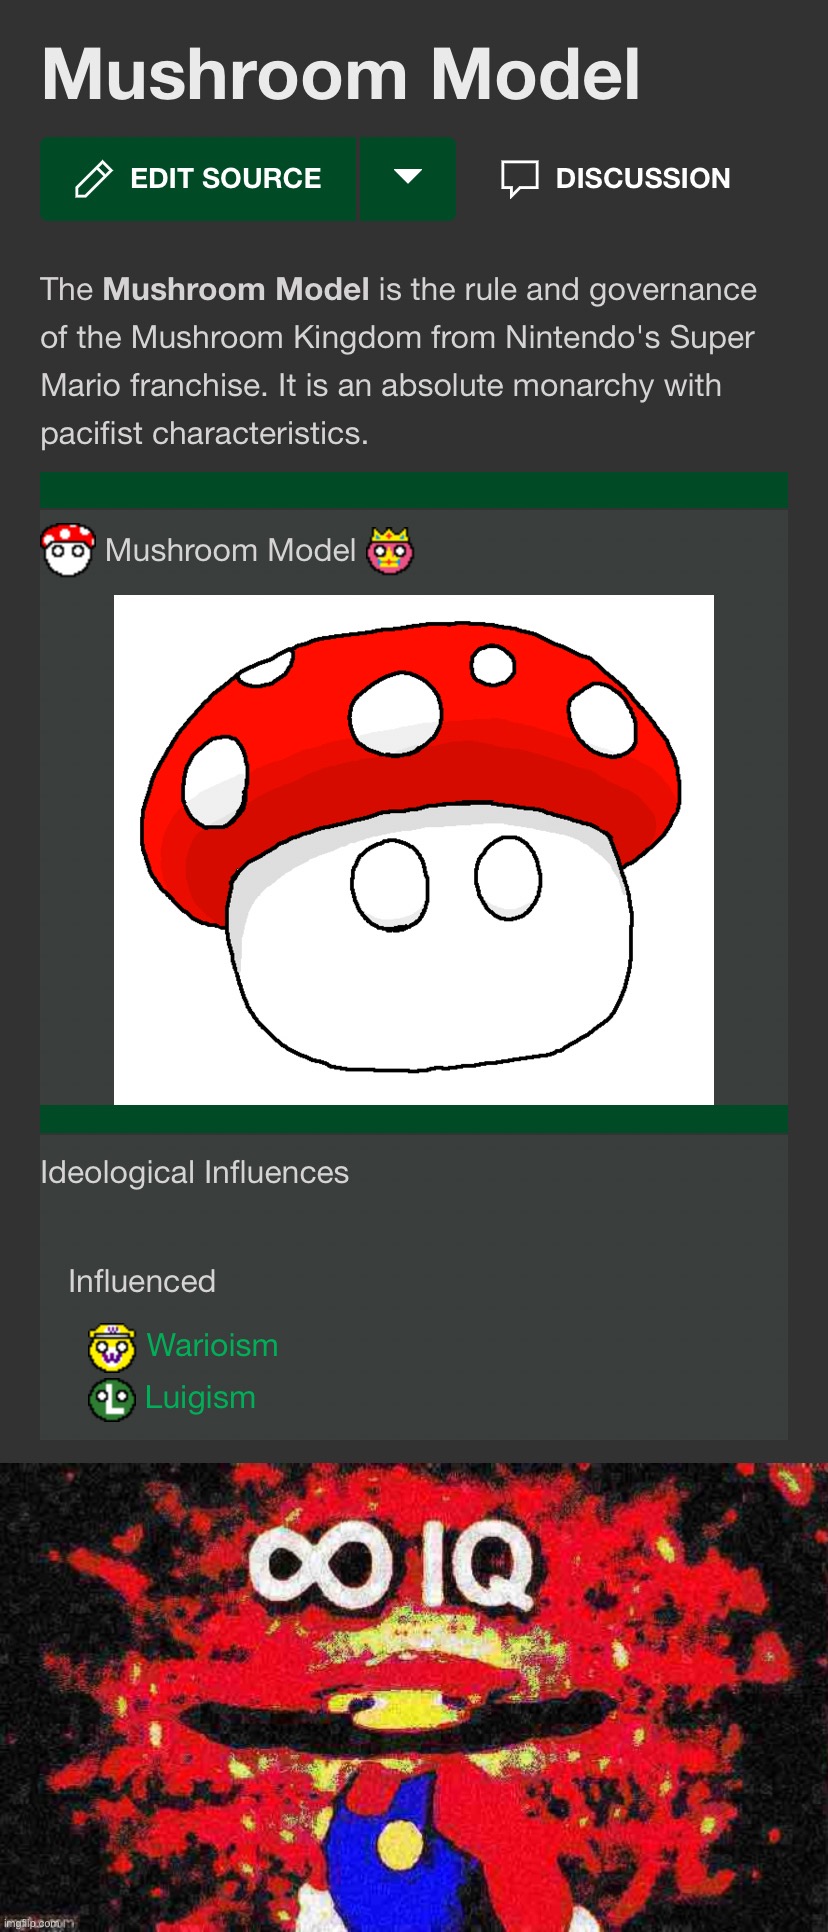 [Influenced: Warioism, Luigism] | image tagged in mushroom model ideology,infinite iq deep-fried 2,mushroom,kingdom,mushroom kingdom,ideology | made w/ Imgflip meme maker